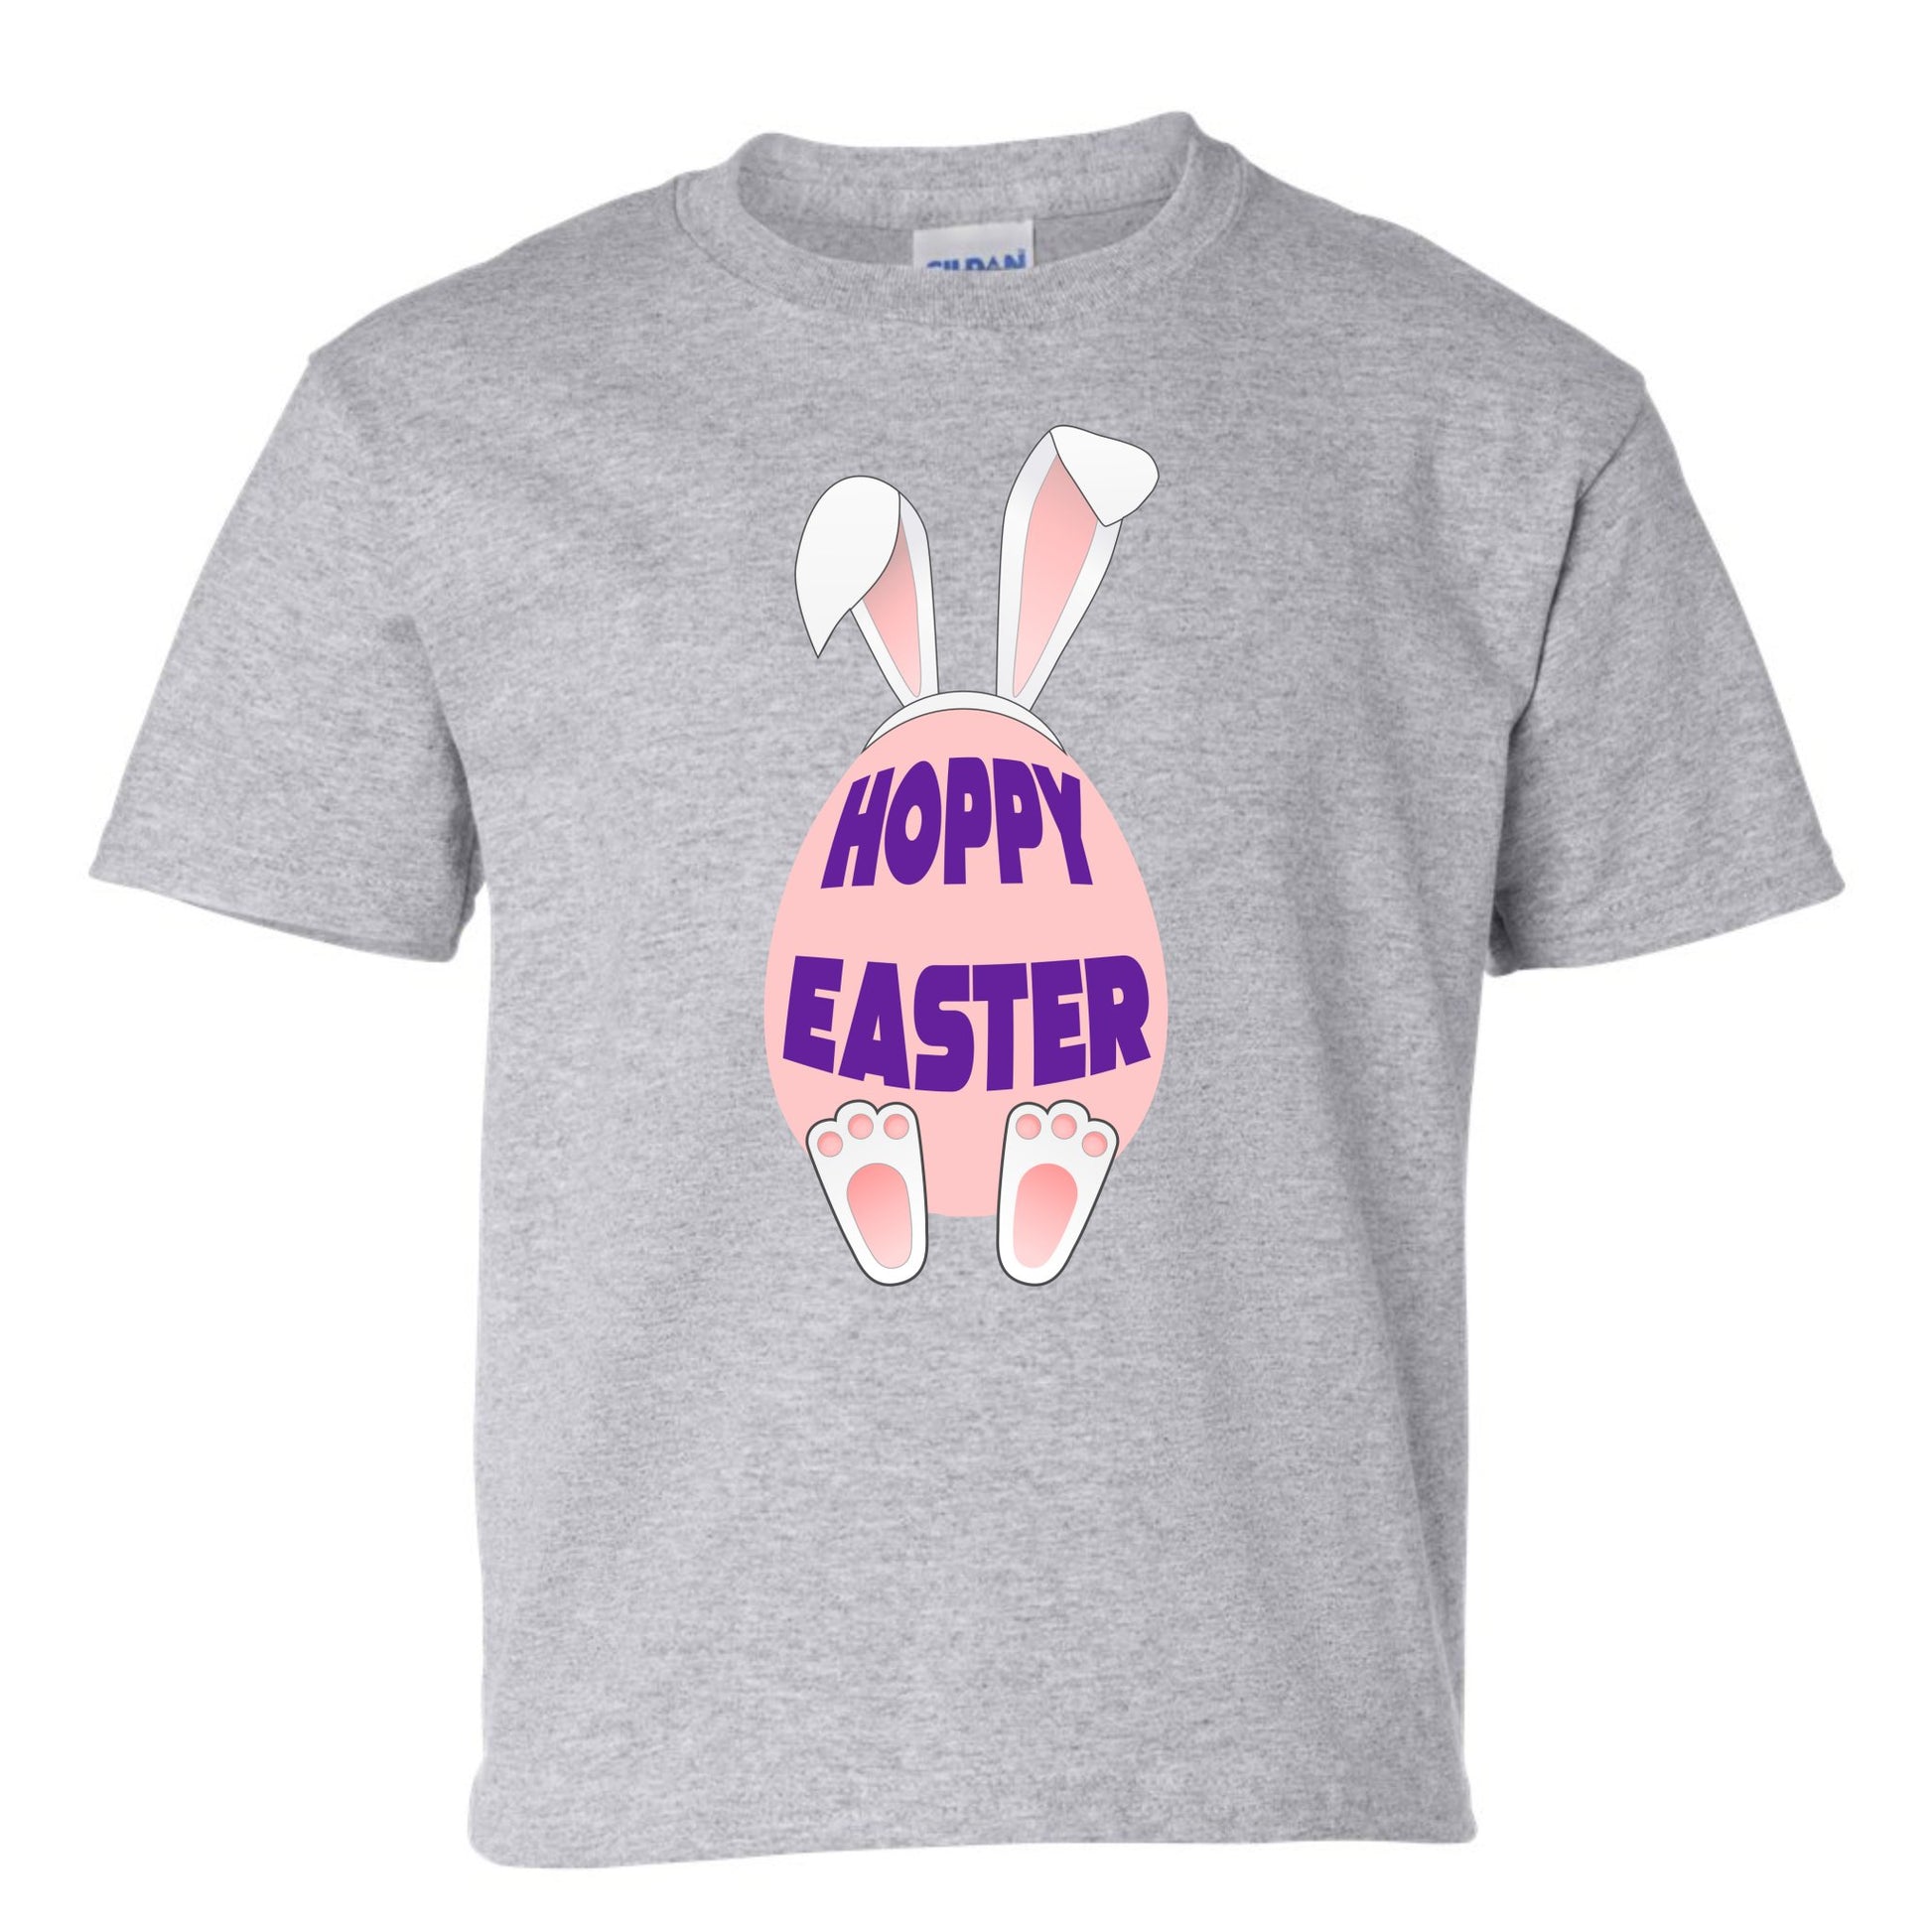 Hoppy Easter T Shirt (Infant, Toddler, or Youth) - SBS T Shop